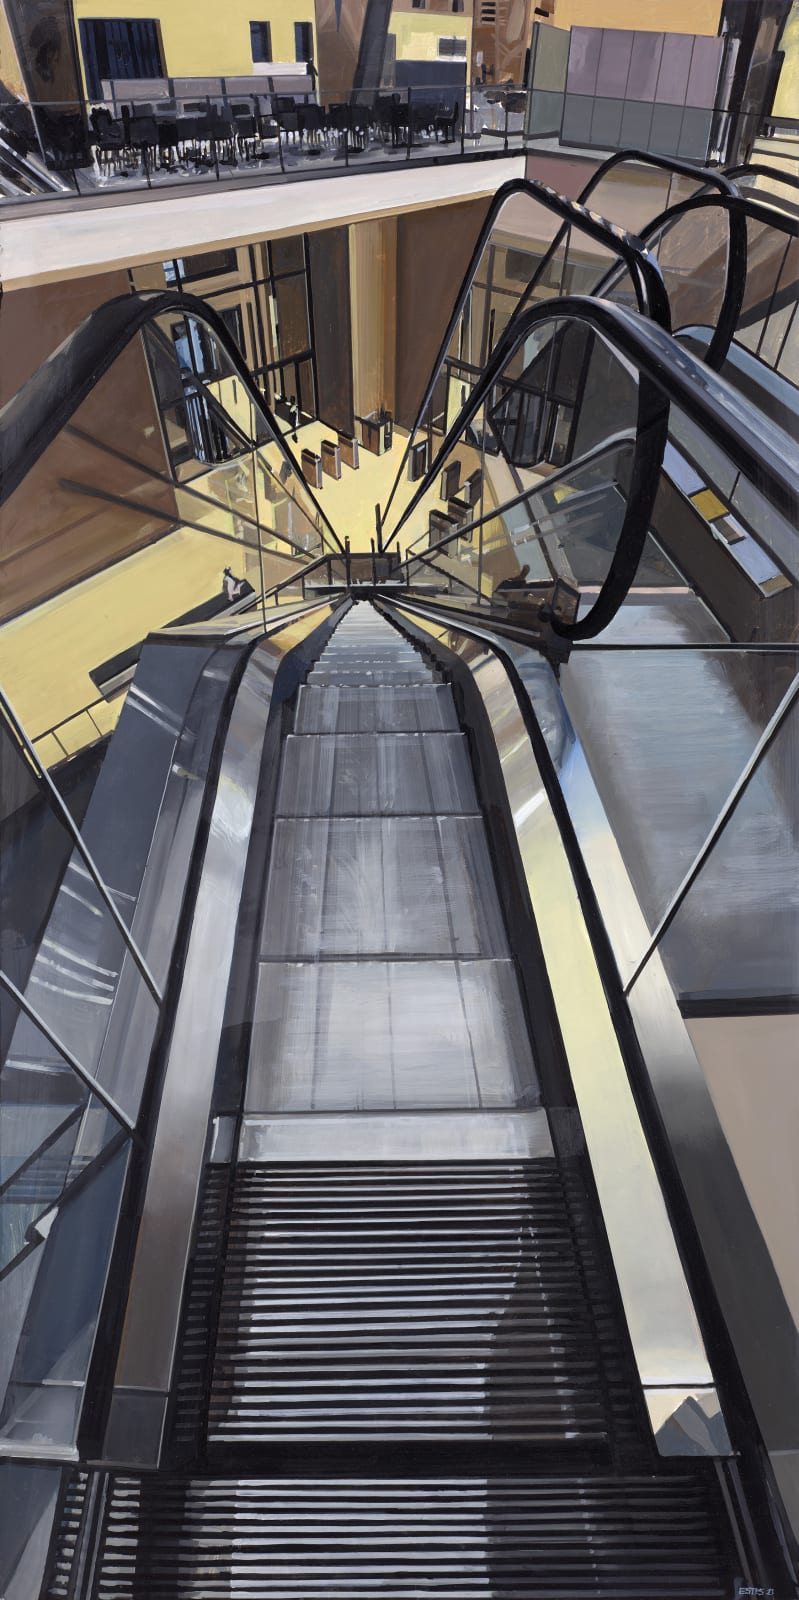 Richard Estes, Escalator in Hearst Tower, 2021